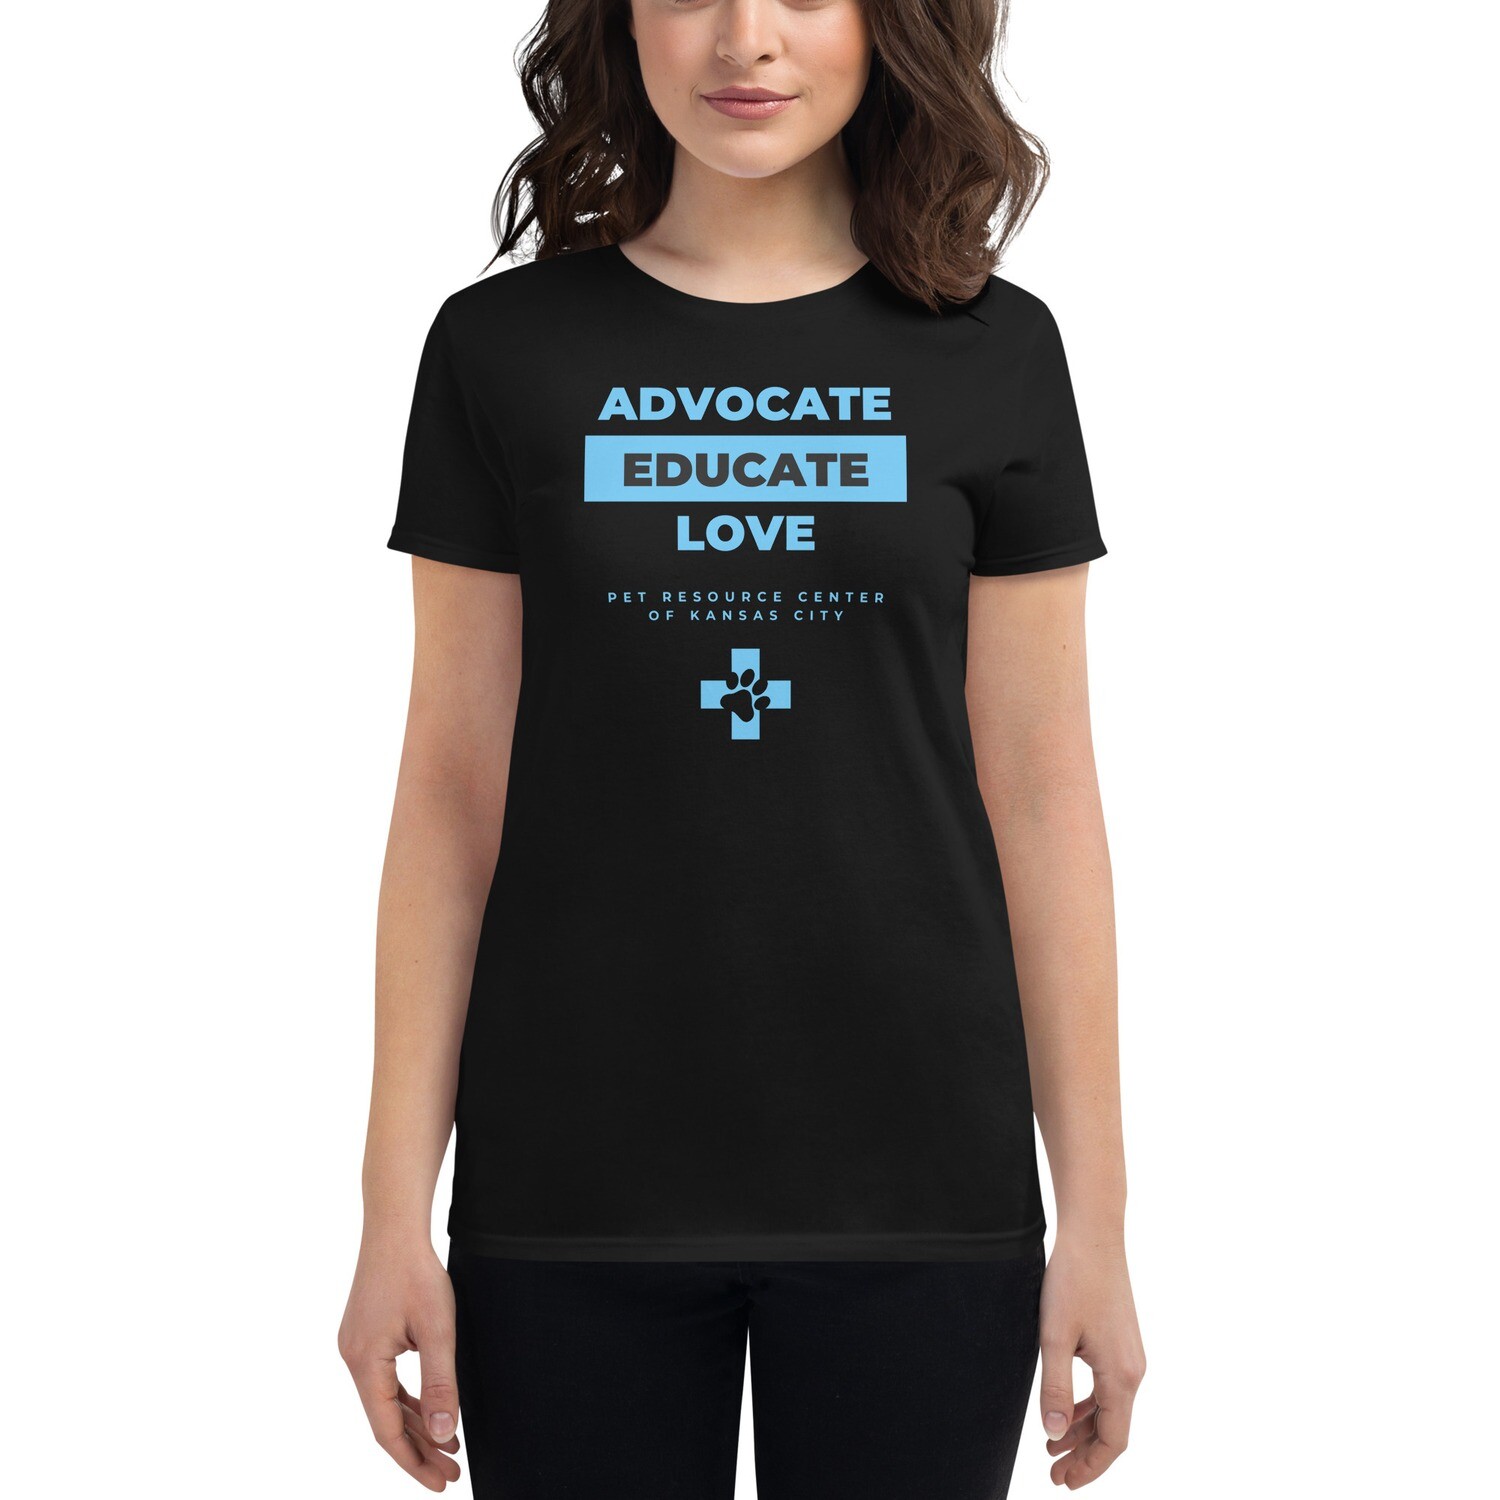 Advocate Educate Love Women's short sleeve t-shirt